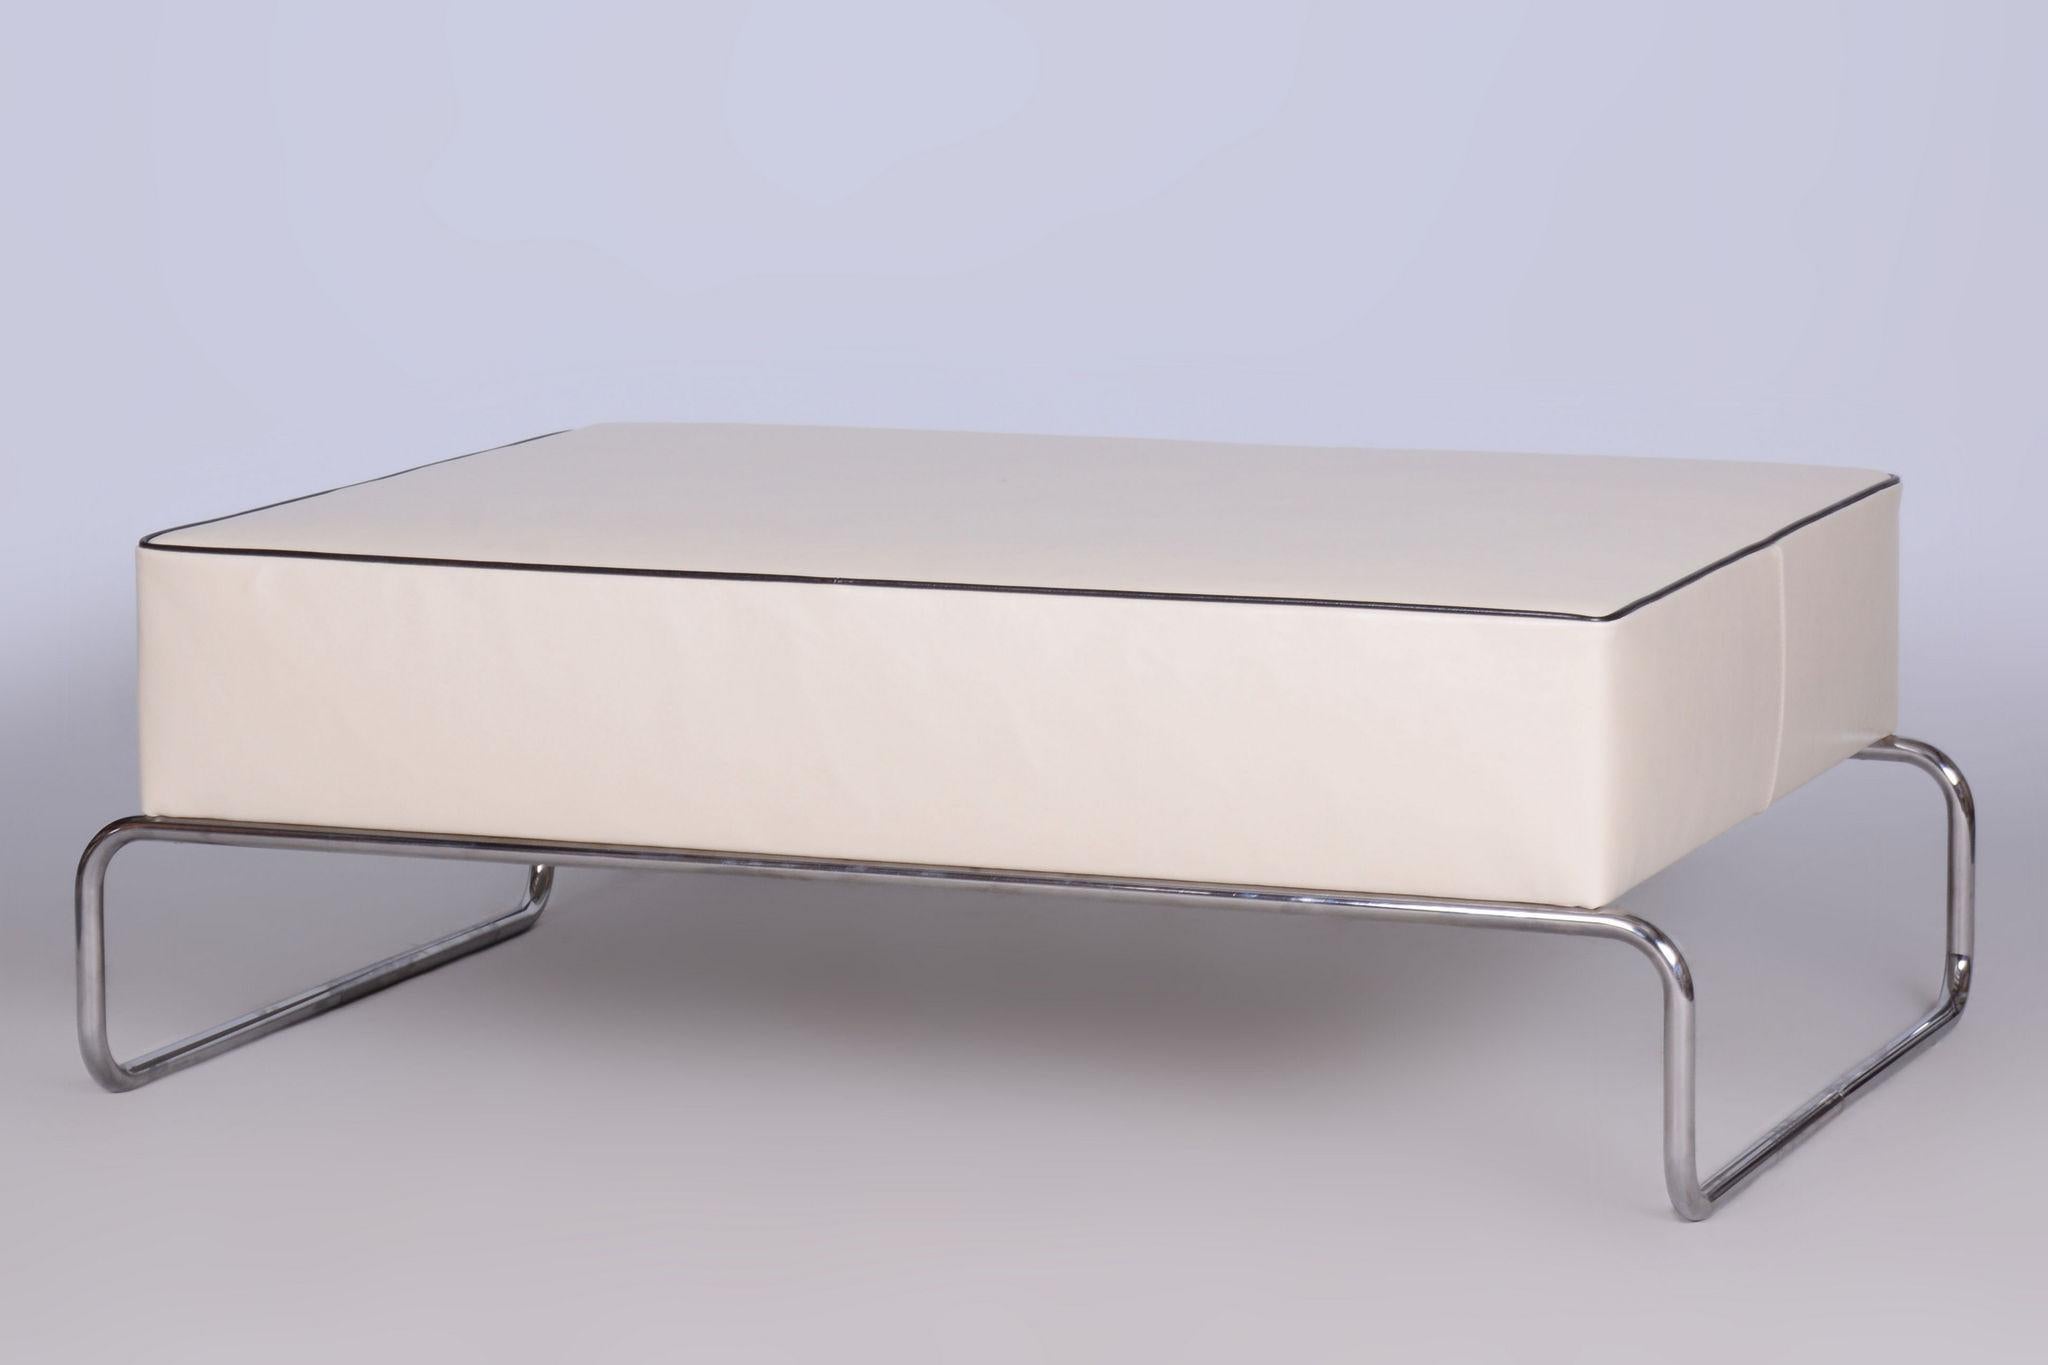 Restored Bauhaus Stool-Table, Chrome Steel, New Upholstery, Czechia, 1930s For Sale 6